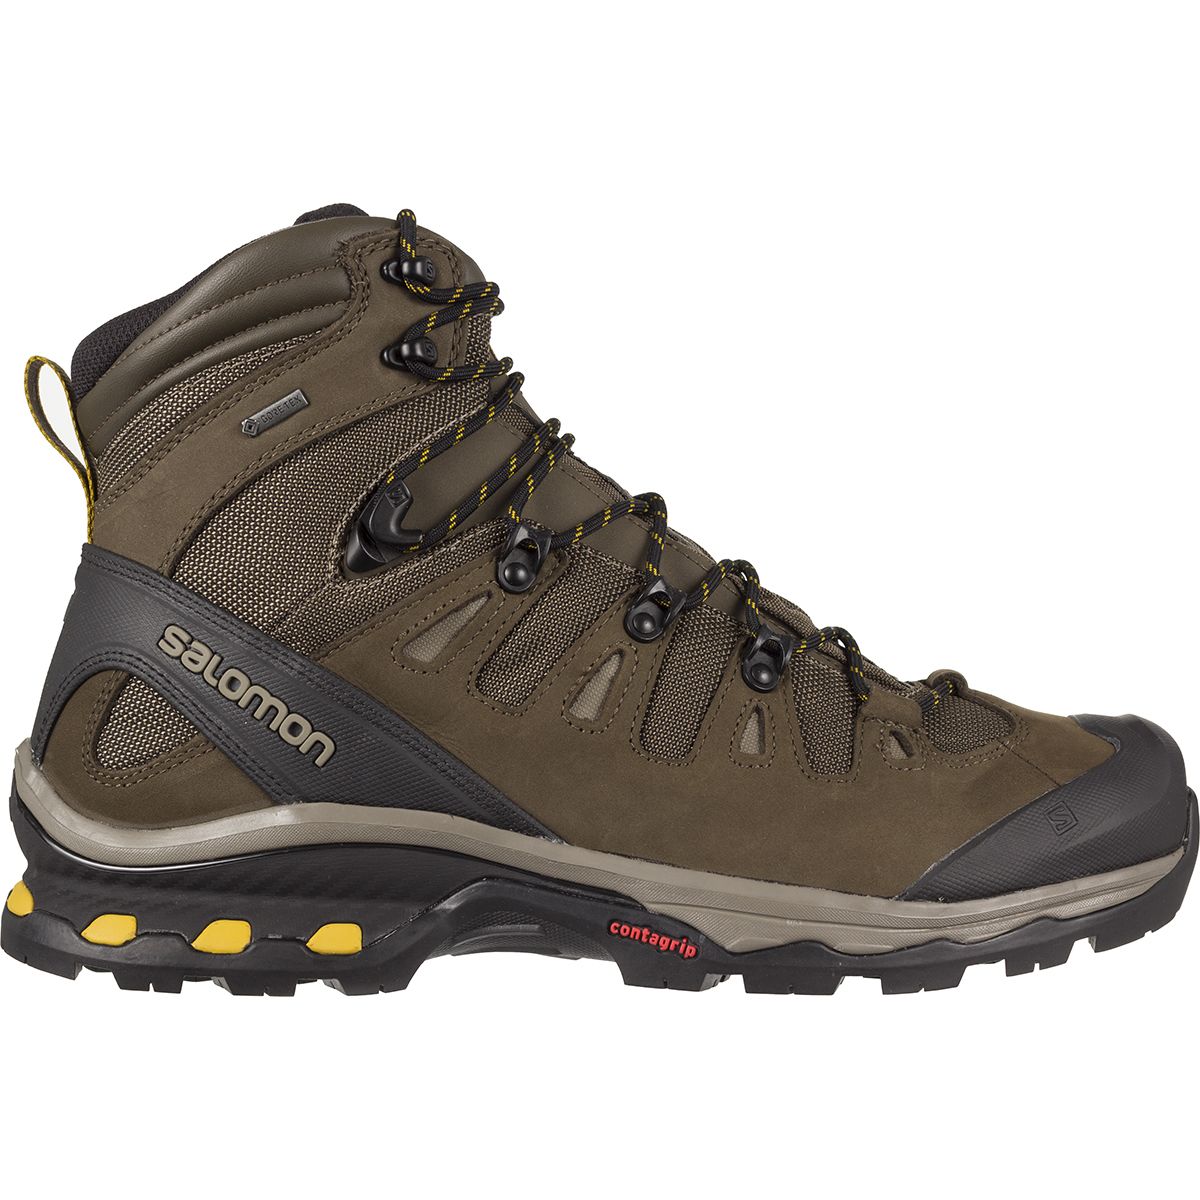 salomon quest 4d 3 gtx men's hiking boot